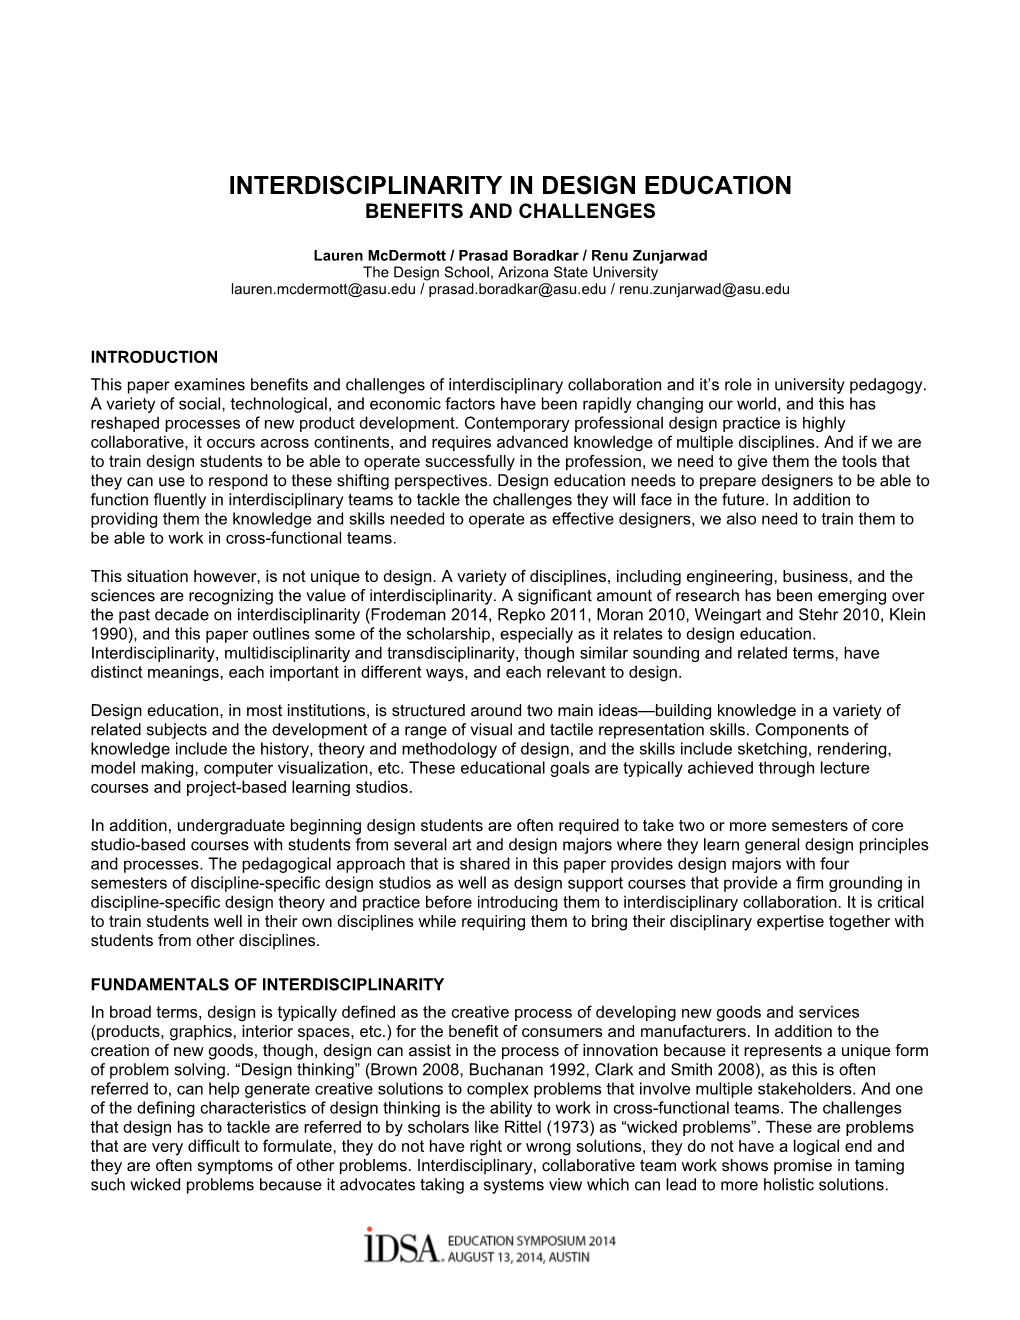 Interdisciplinarity in Design Education Benefits and Challenges